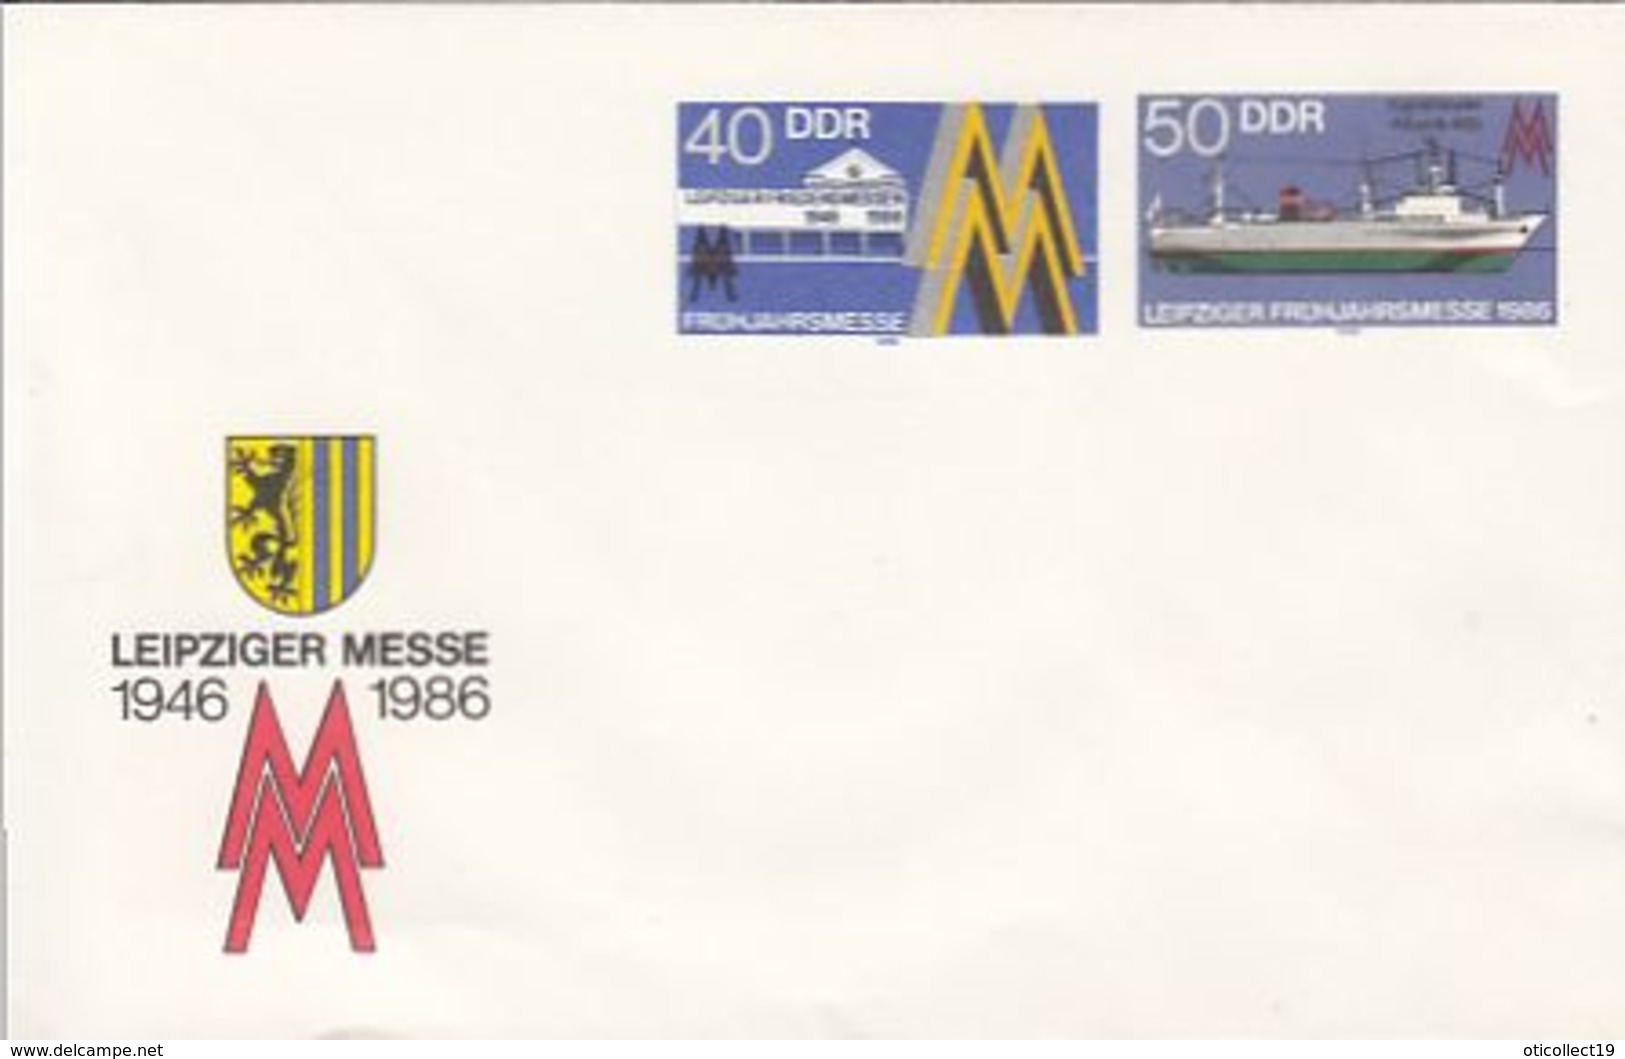 LEIPZIG FAIR, COAT OF ARMS, SHIPP, COVER STATIONERY, 1986, GERMANY-DDR - Enveloppes - Neuves